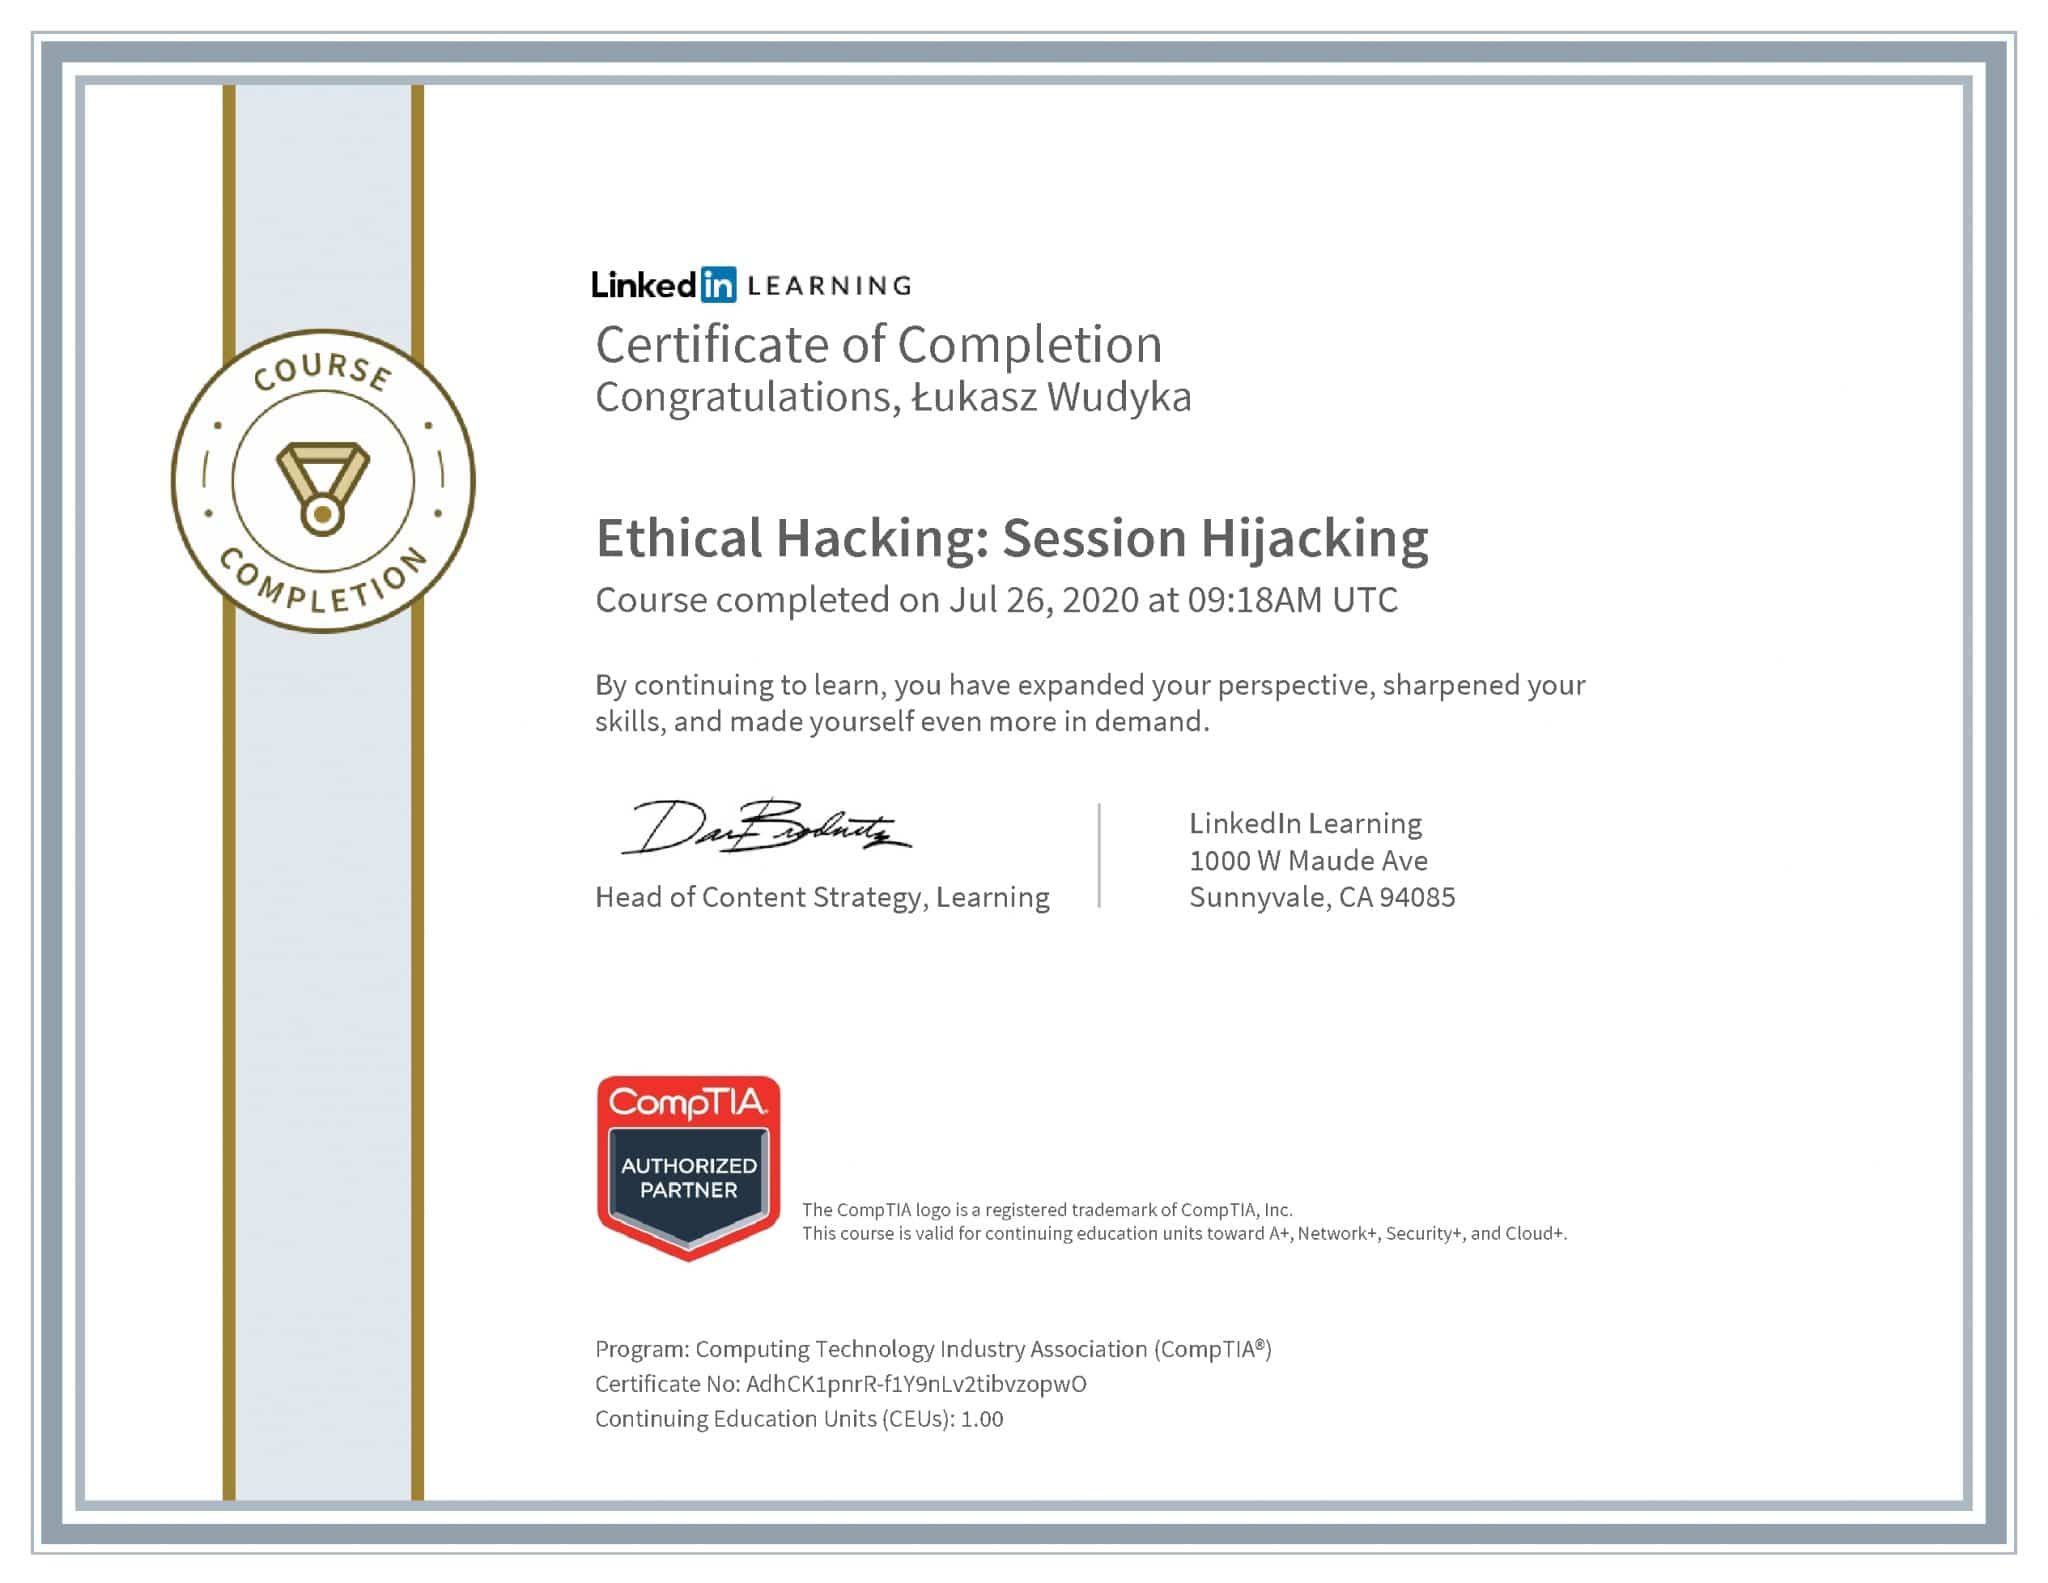 Łukasz Wudyka certyfikat LinkedIn Ethical Hacking: Session Hijacking CompTIA